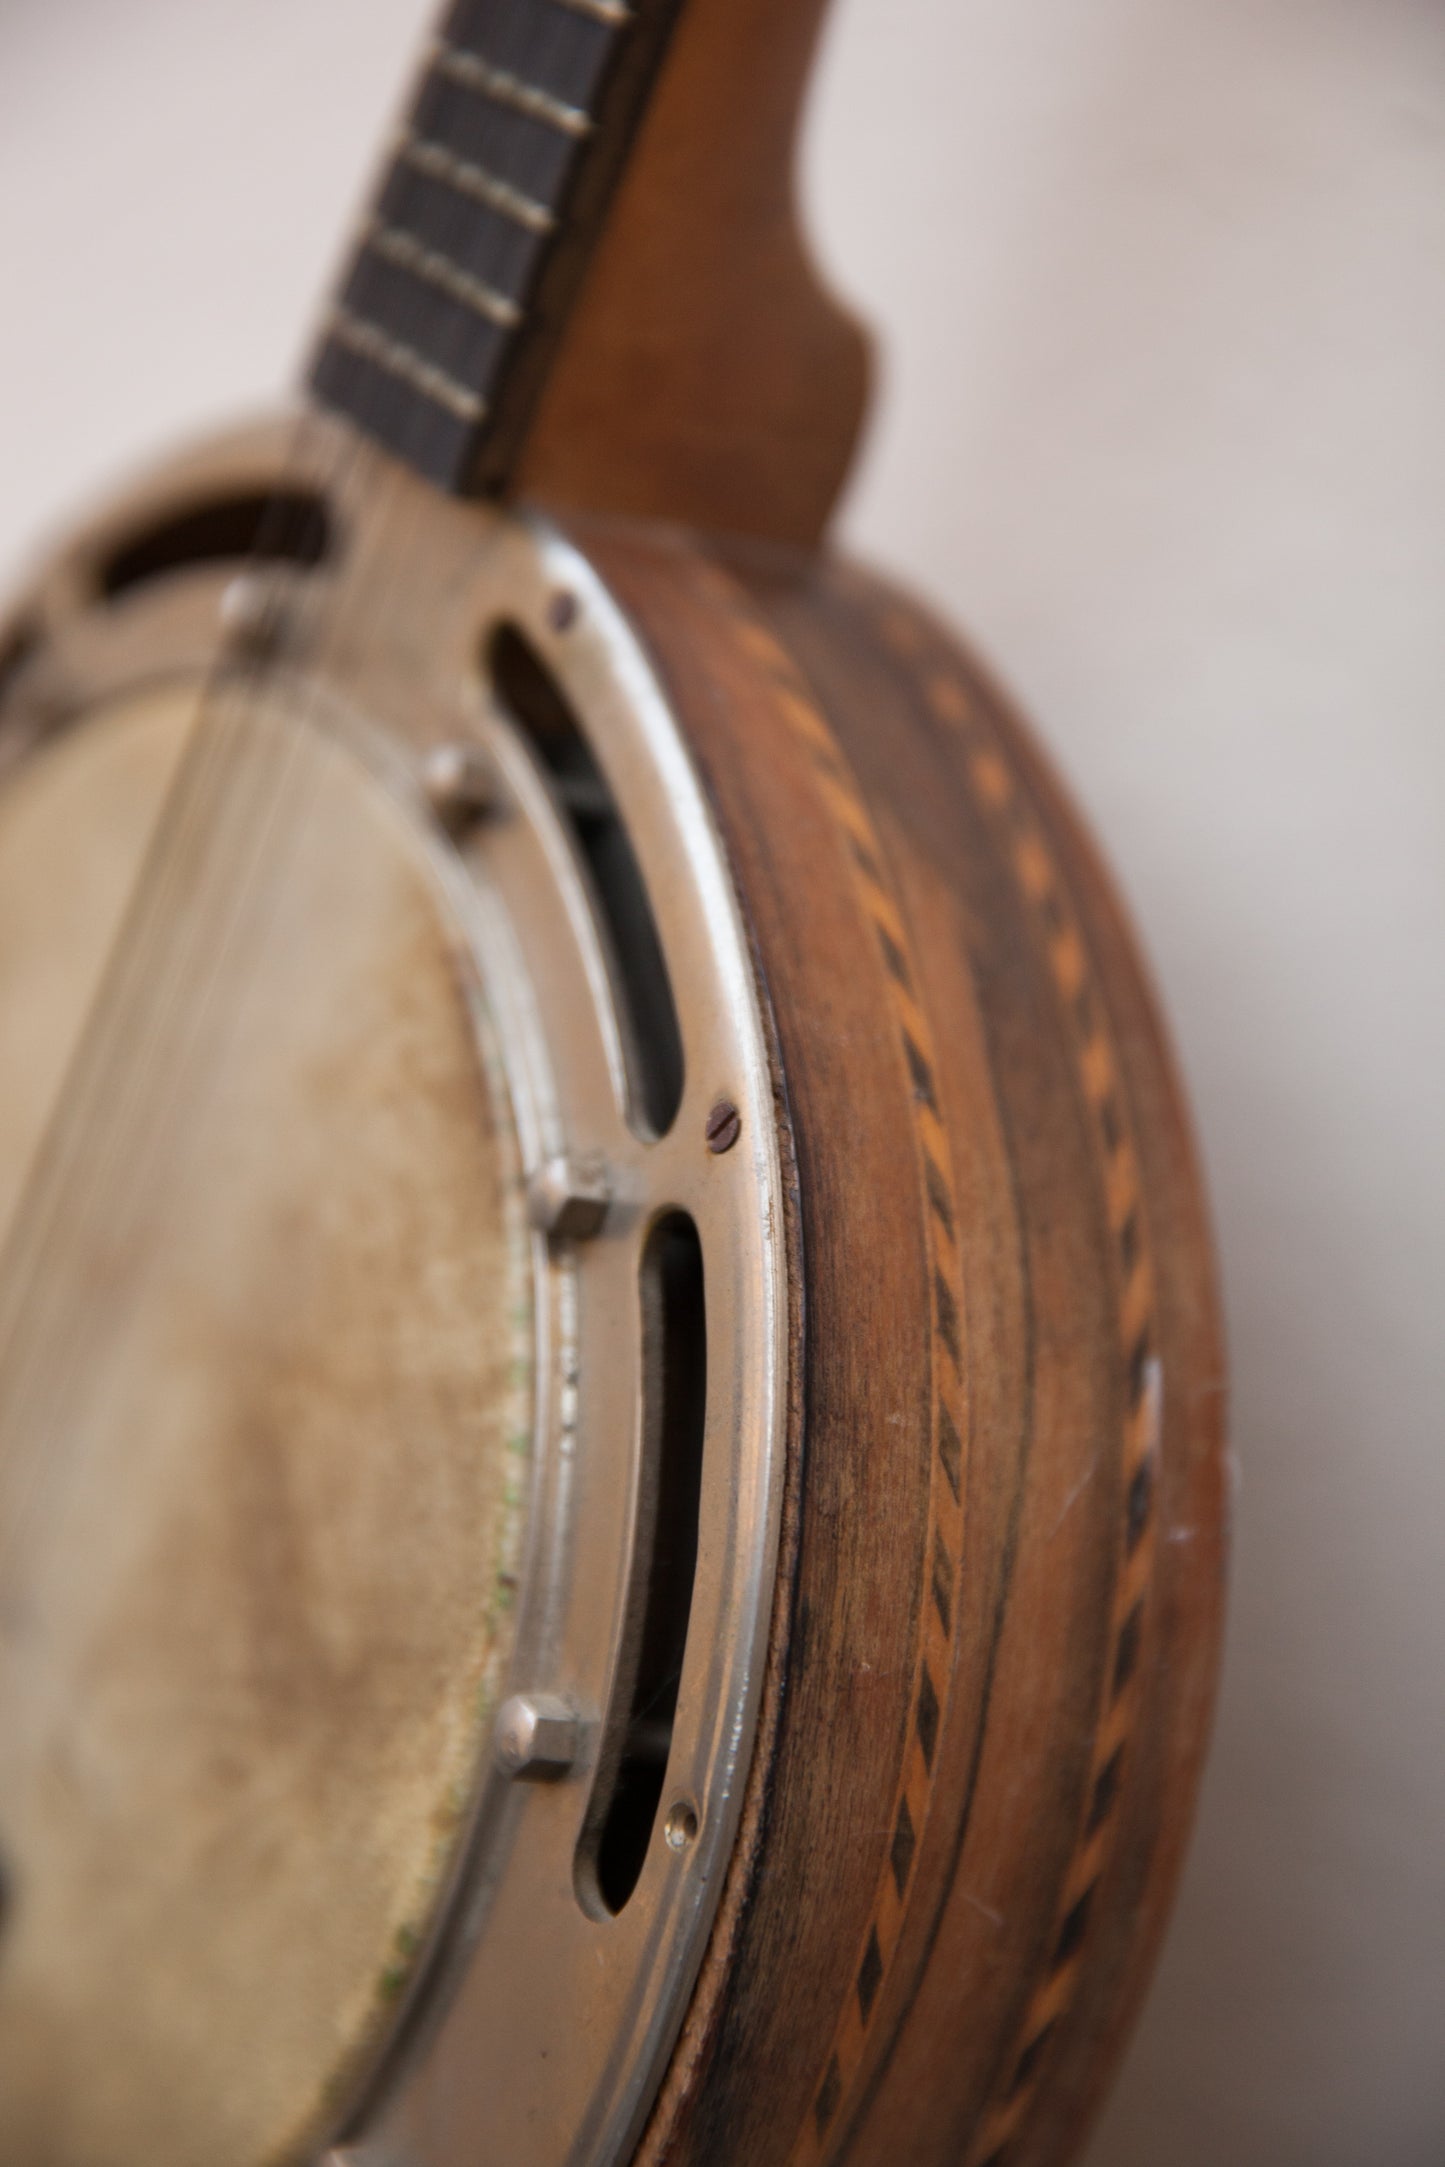 A Banjo. Art Deco Era Musical Instrument With Wood Inlay. Achille Jacomoni.